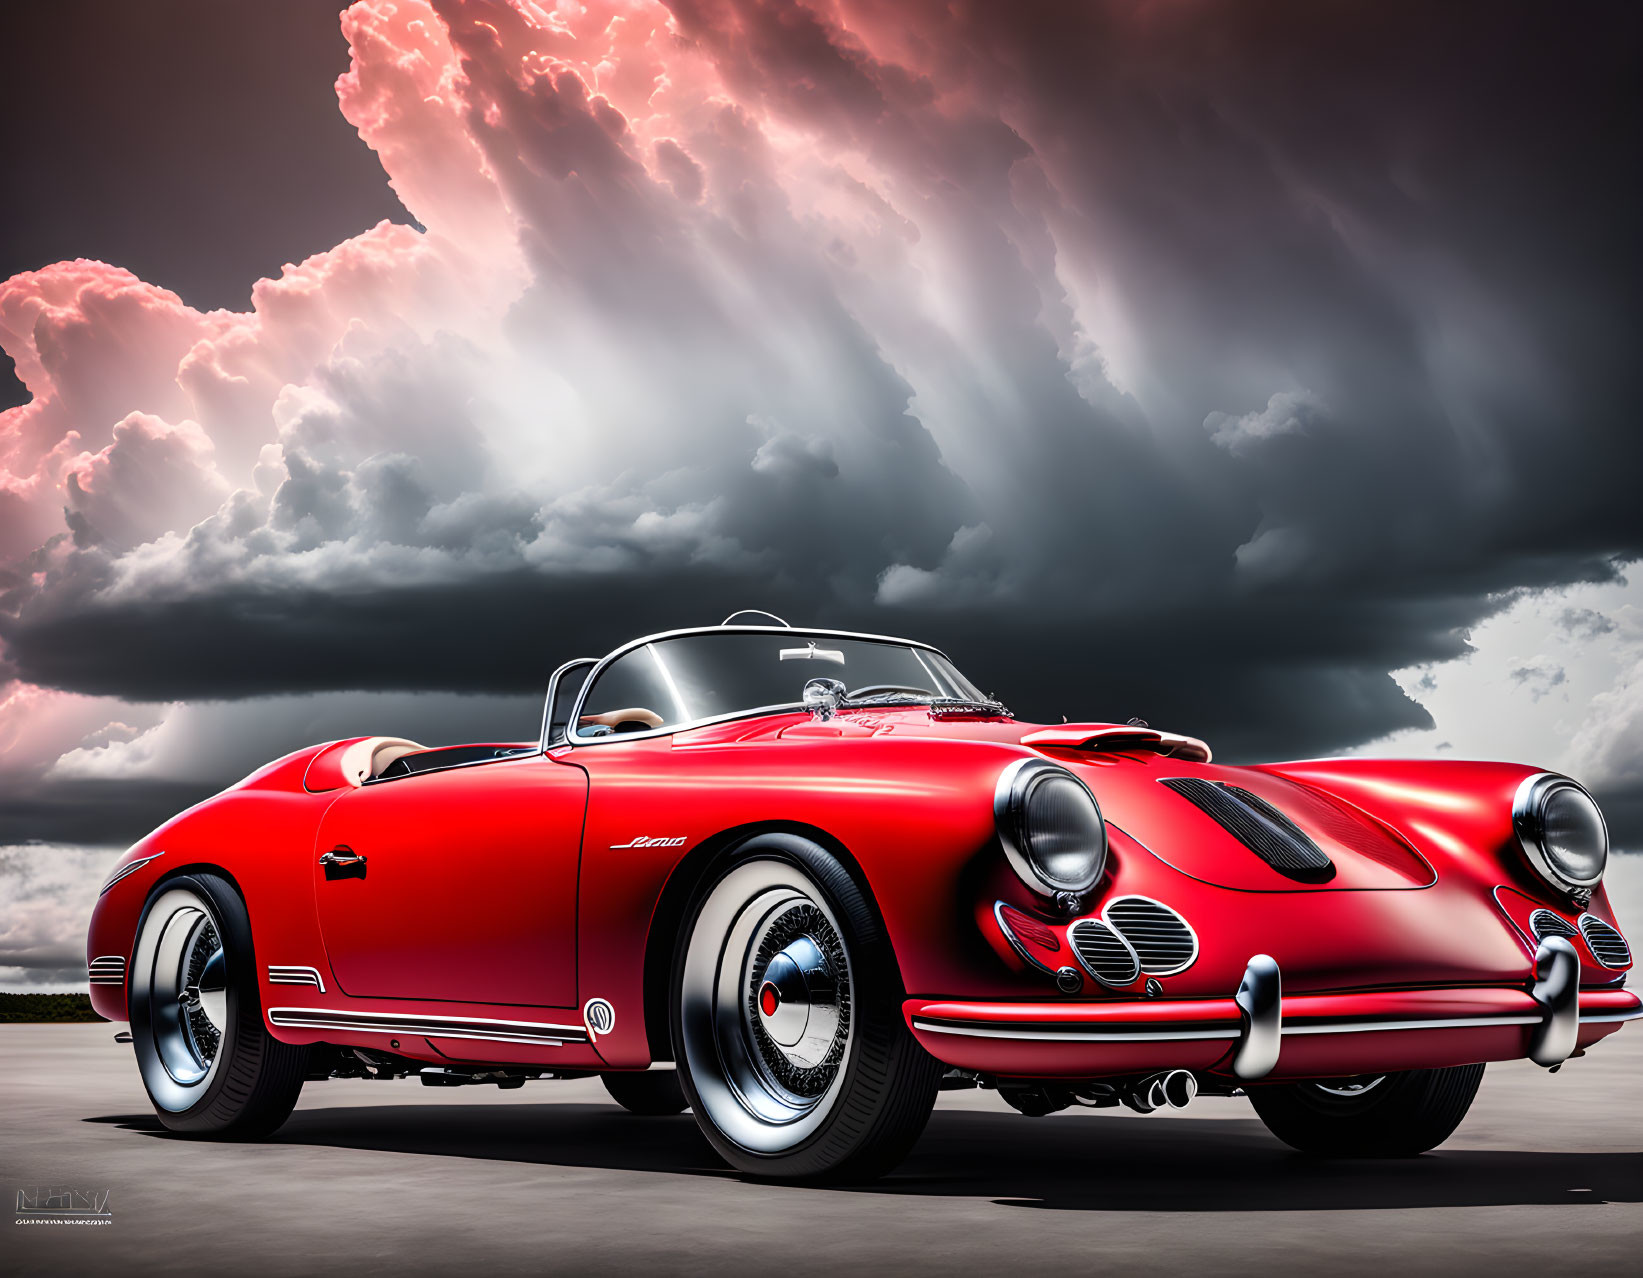 Vintage Red Porsche 356 Speedster Convertible in Dramatic Sky